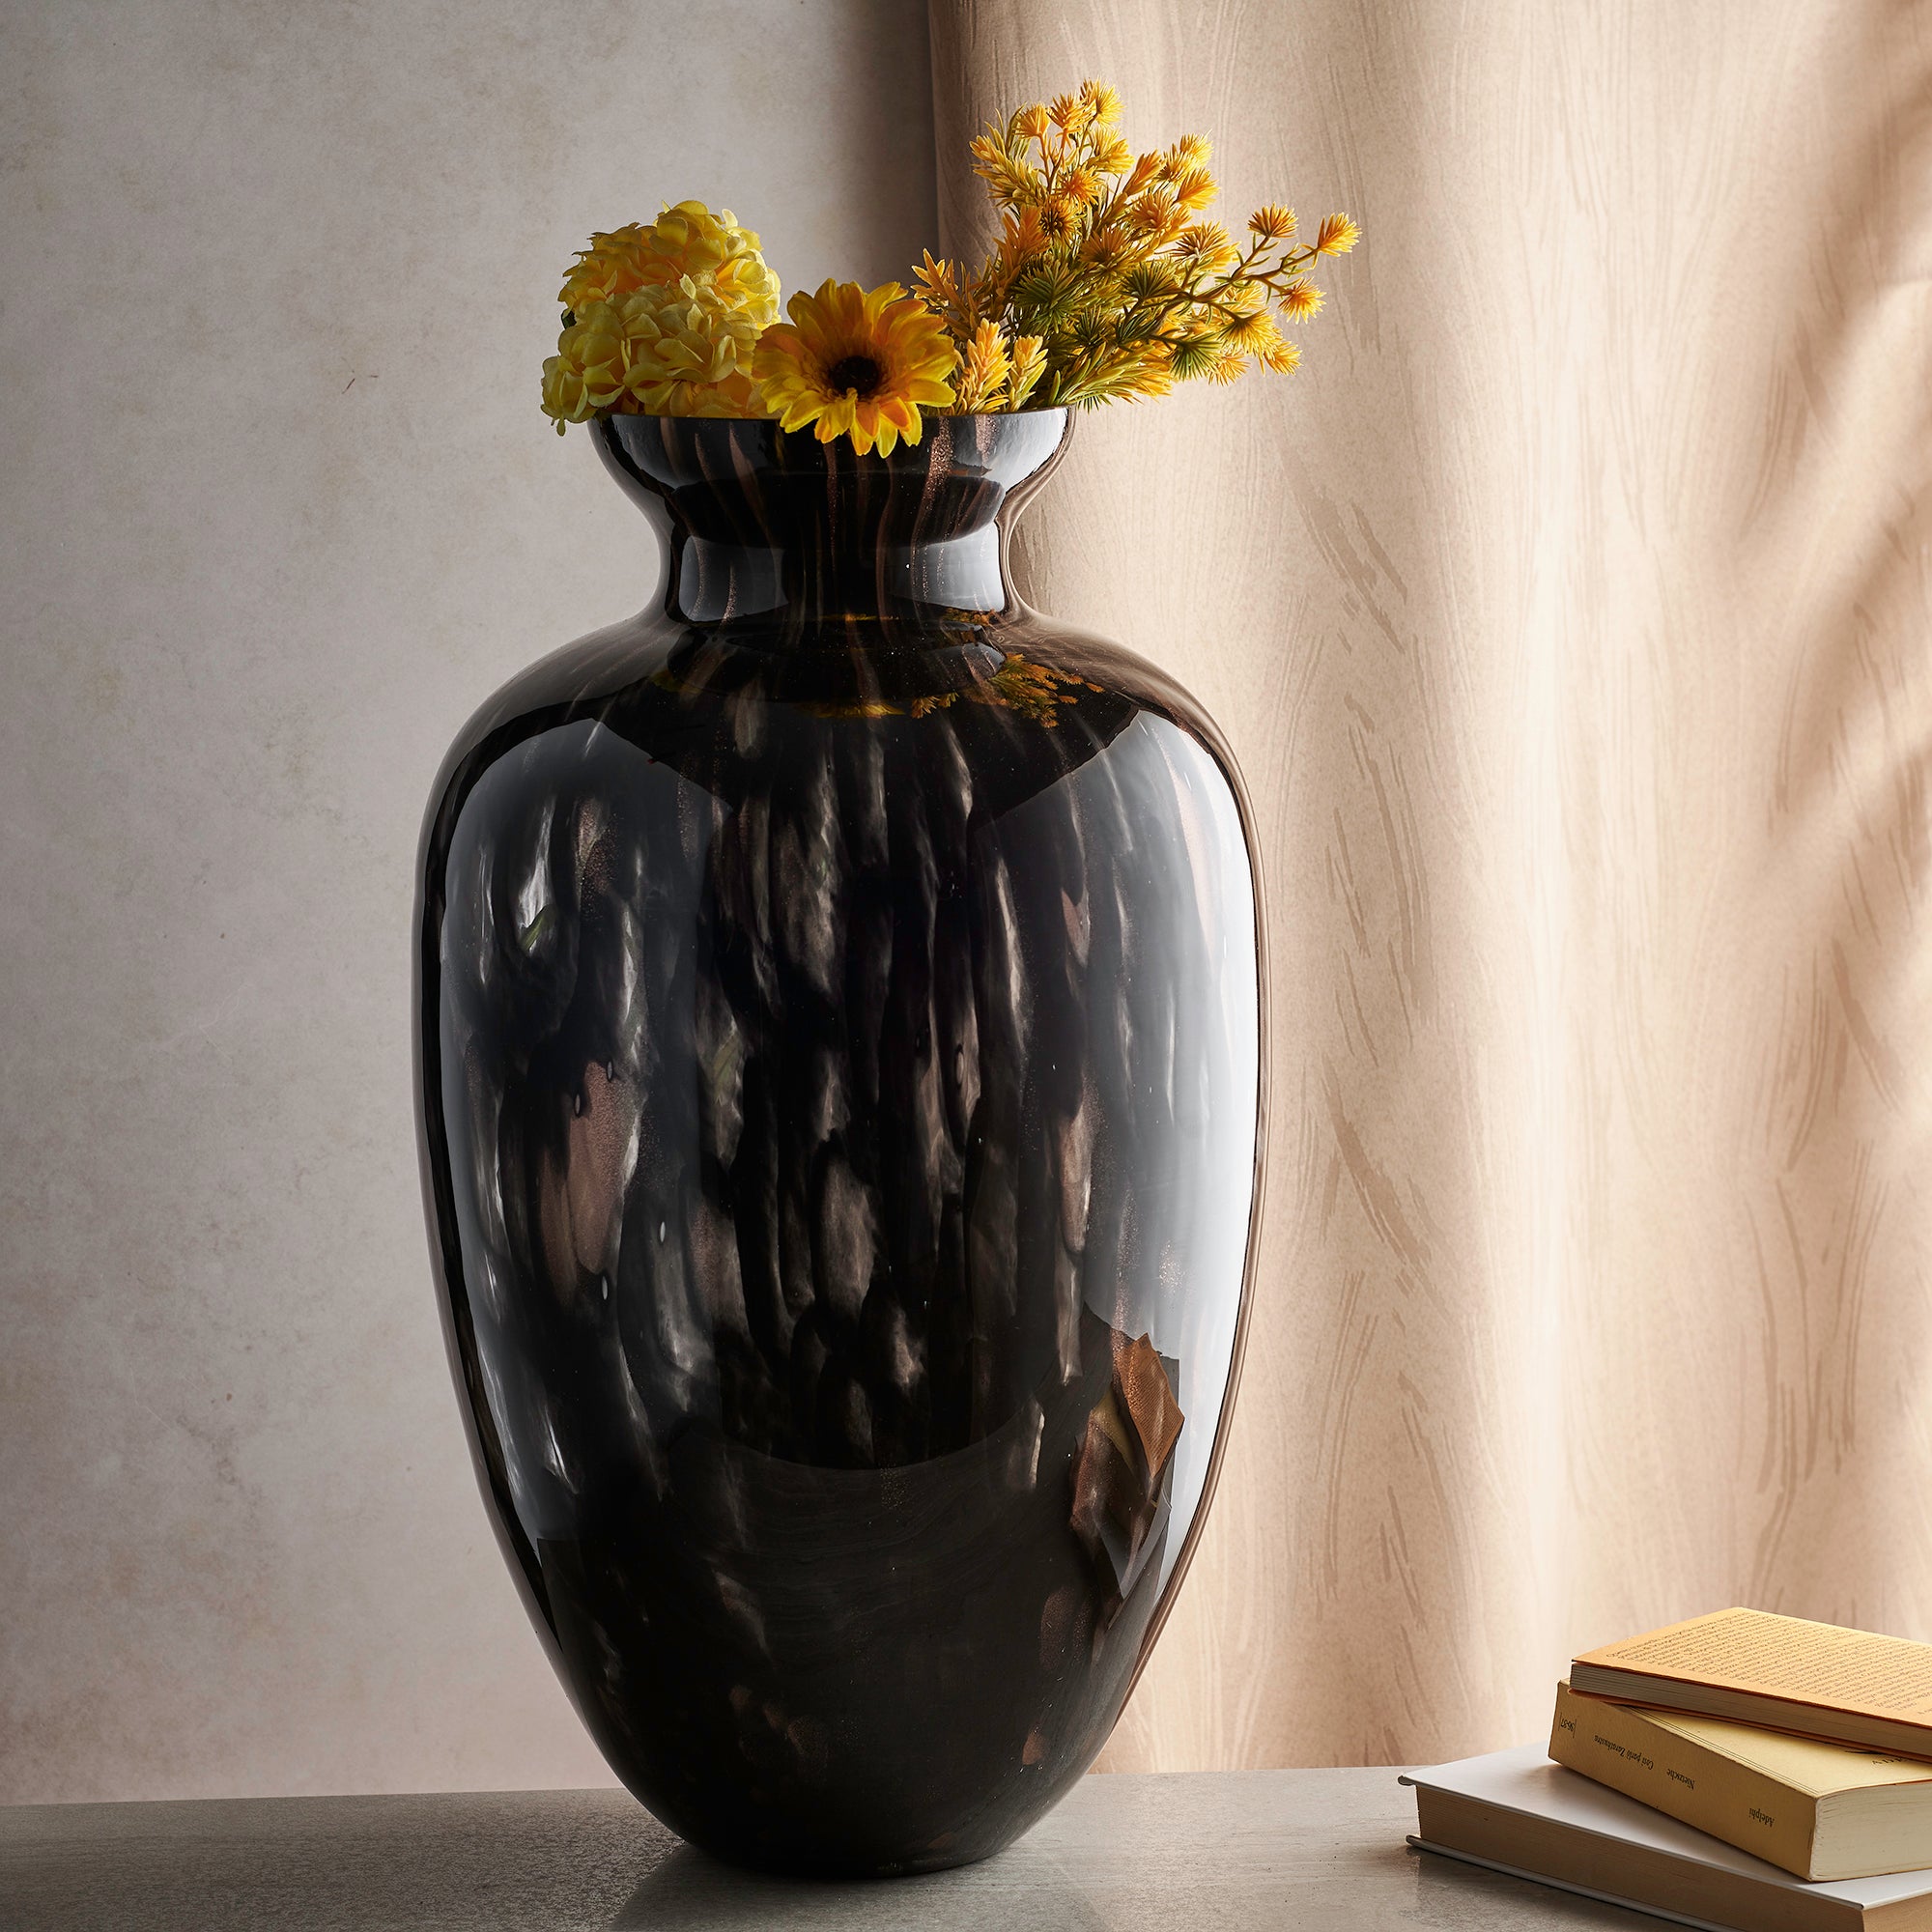 REINESSANCE jarrón artesanal negro en cristal de Murano